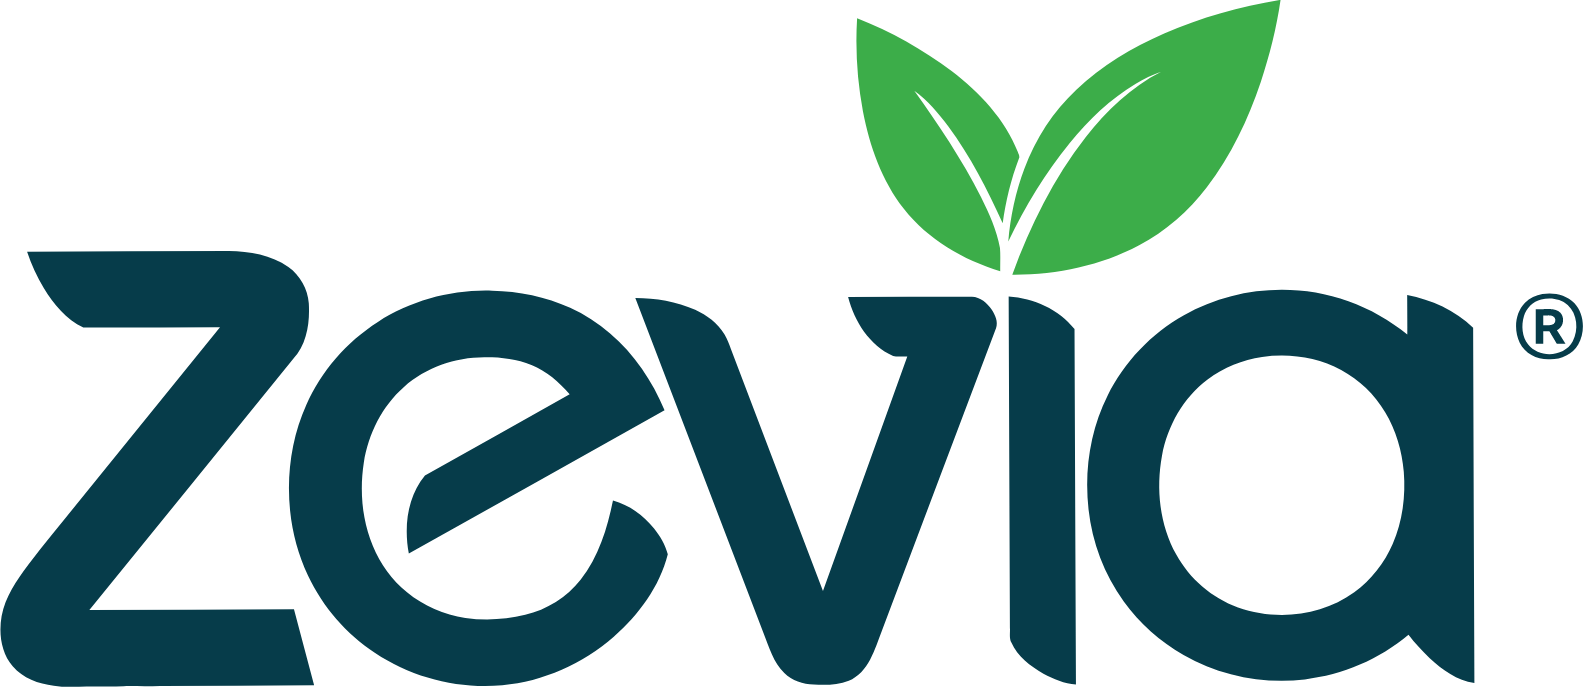 Zevia logo large (transparent PNG)